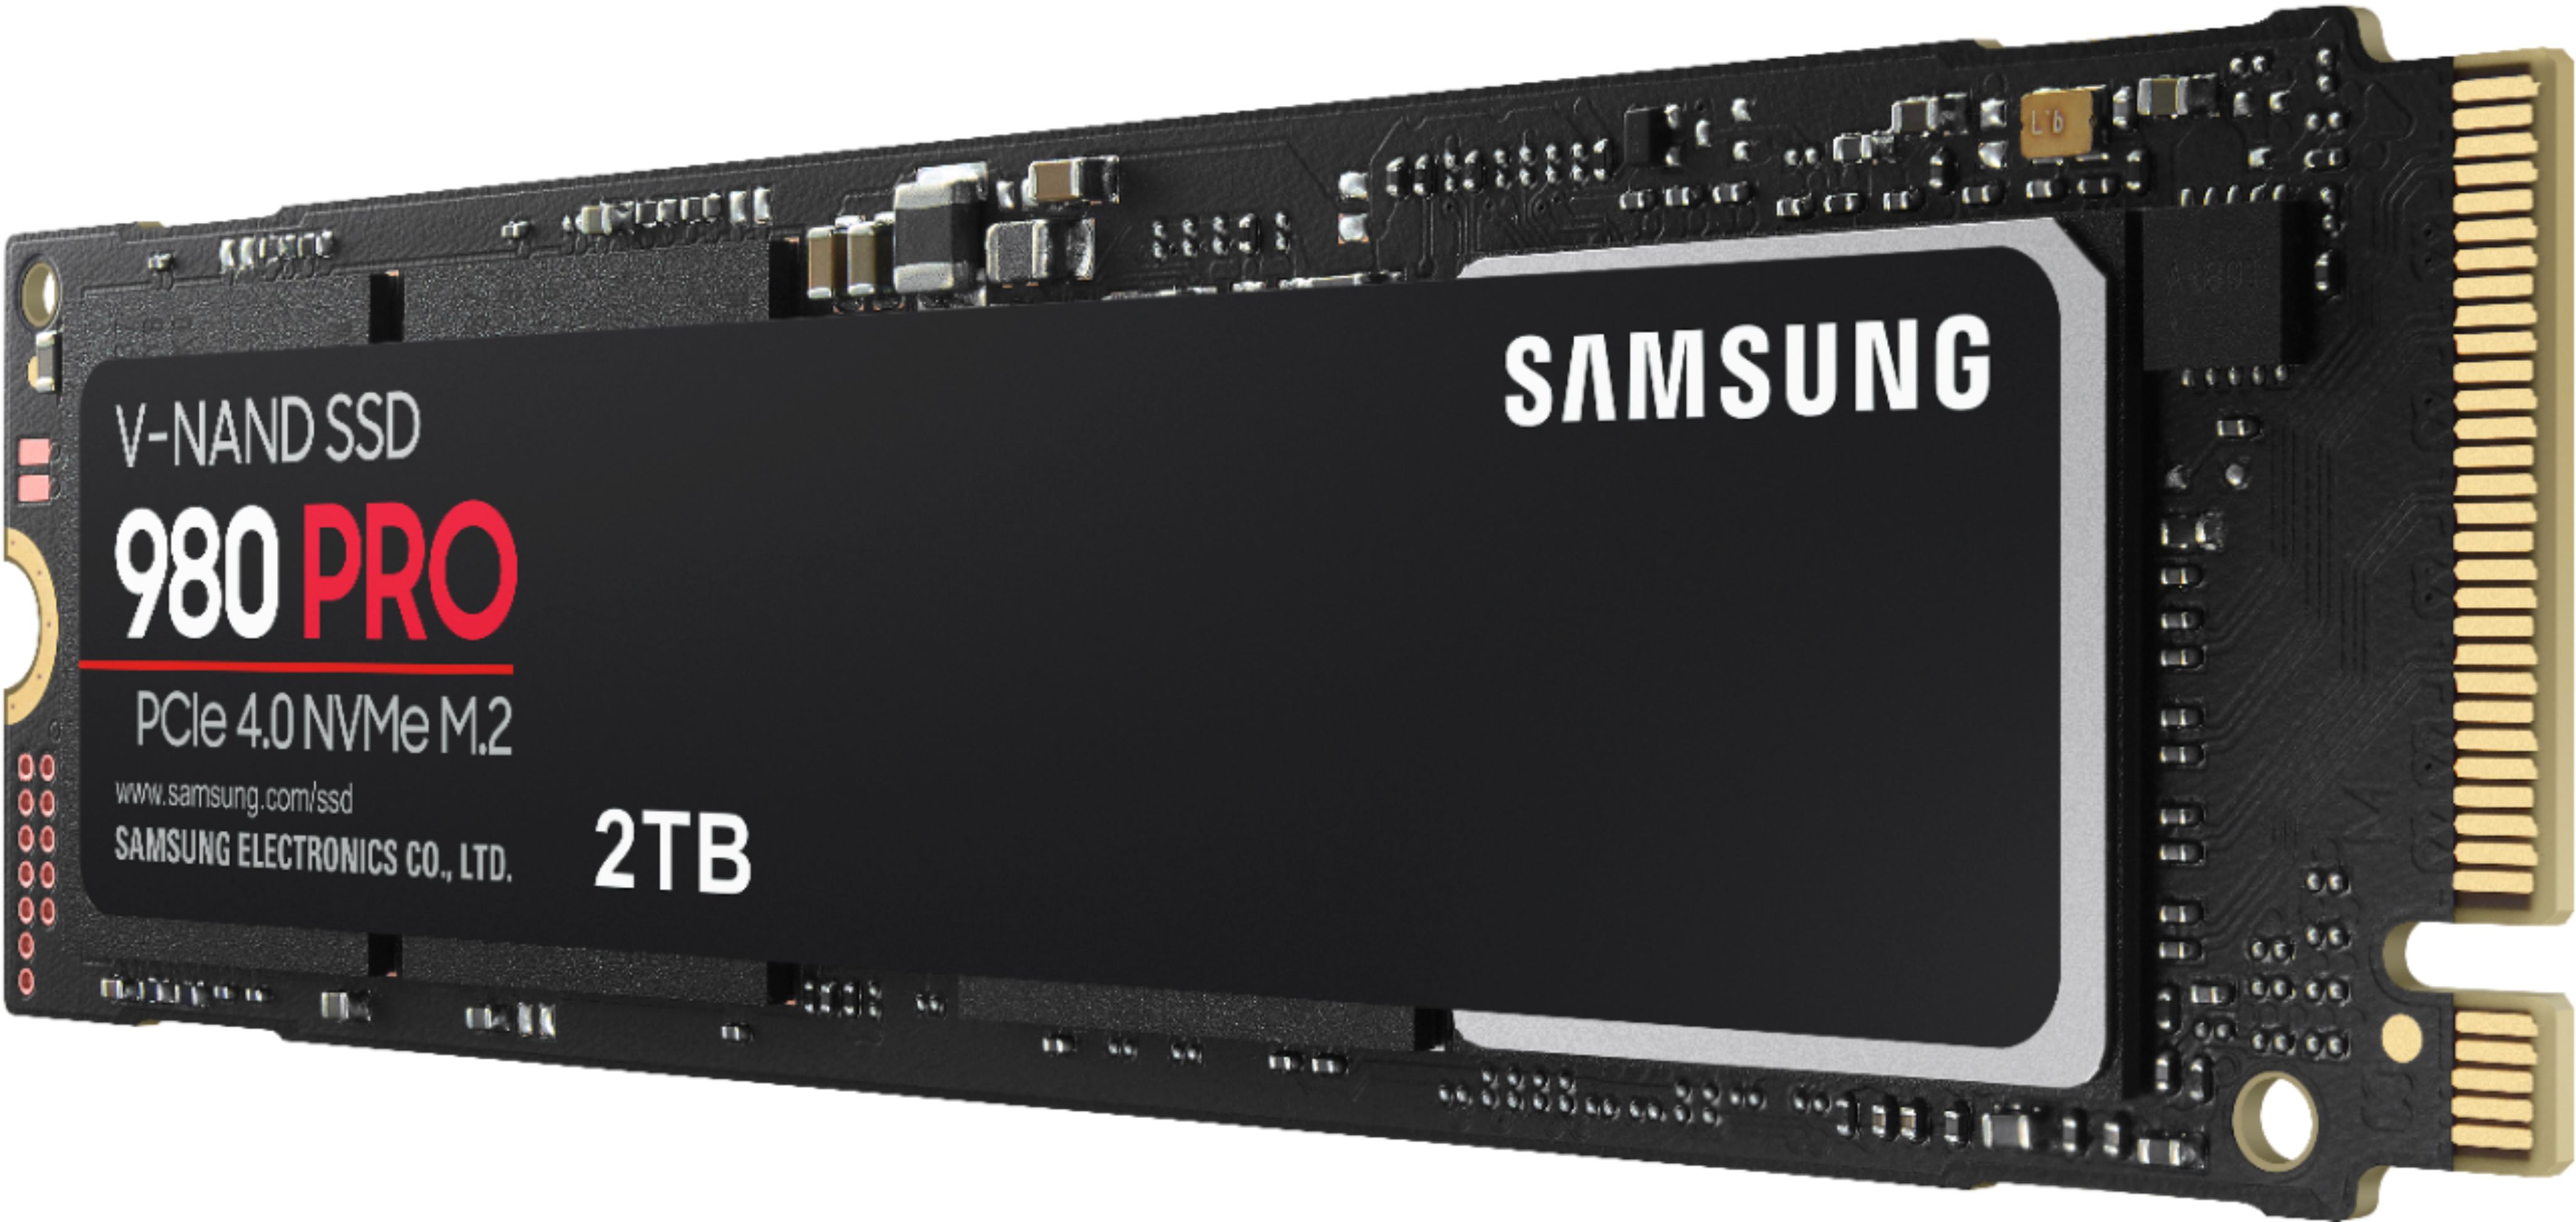 Samsung 980 PRO 2TB Internal Gaming SSD PCIe Gen 4 x4 NVMe 